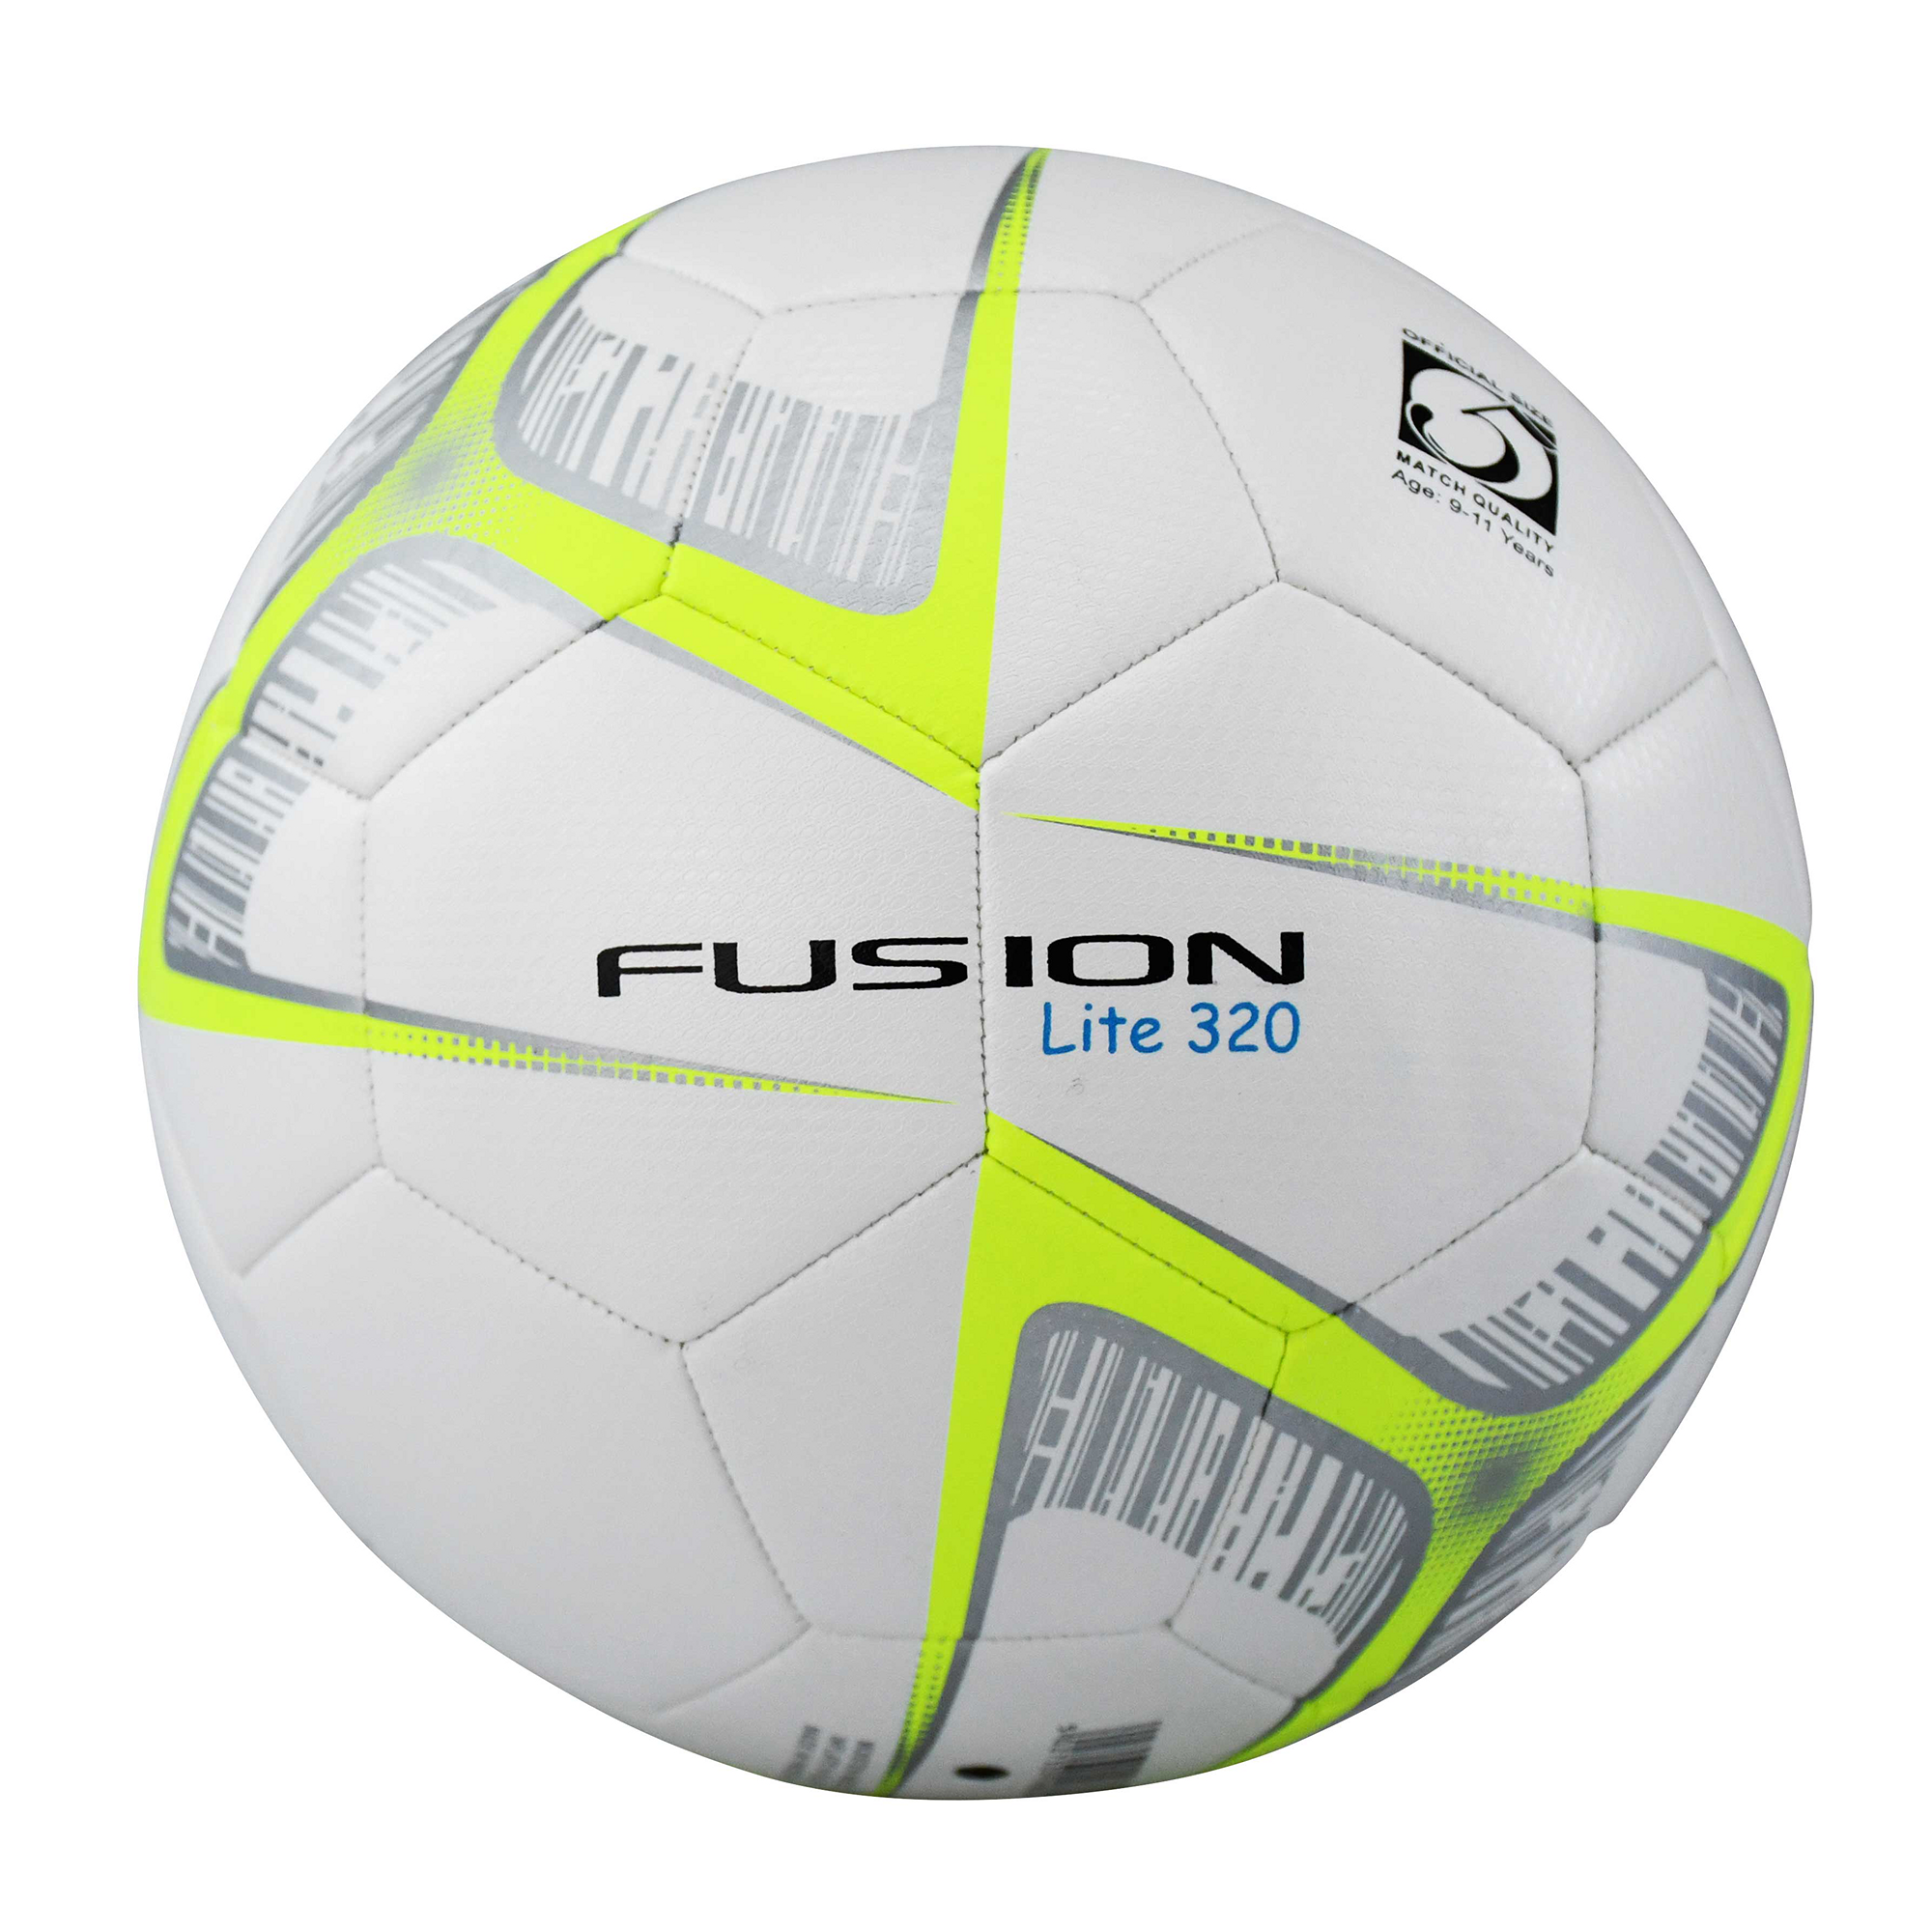 Precision Fusion Lite Footbal 320 Sz5